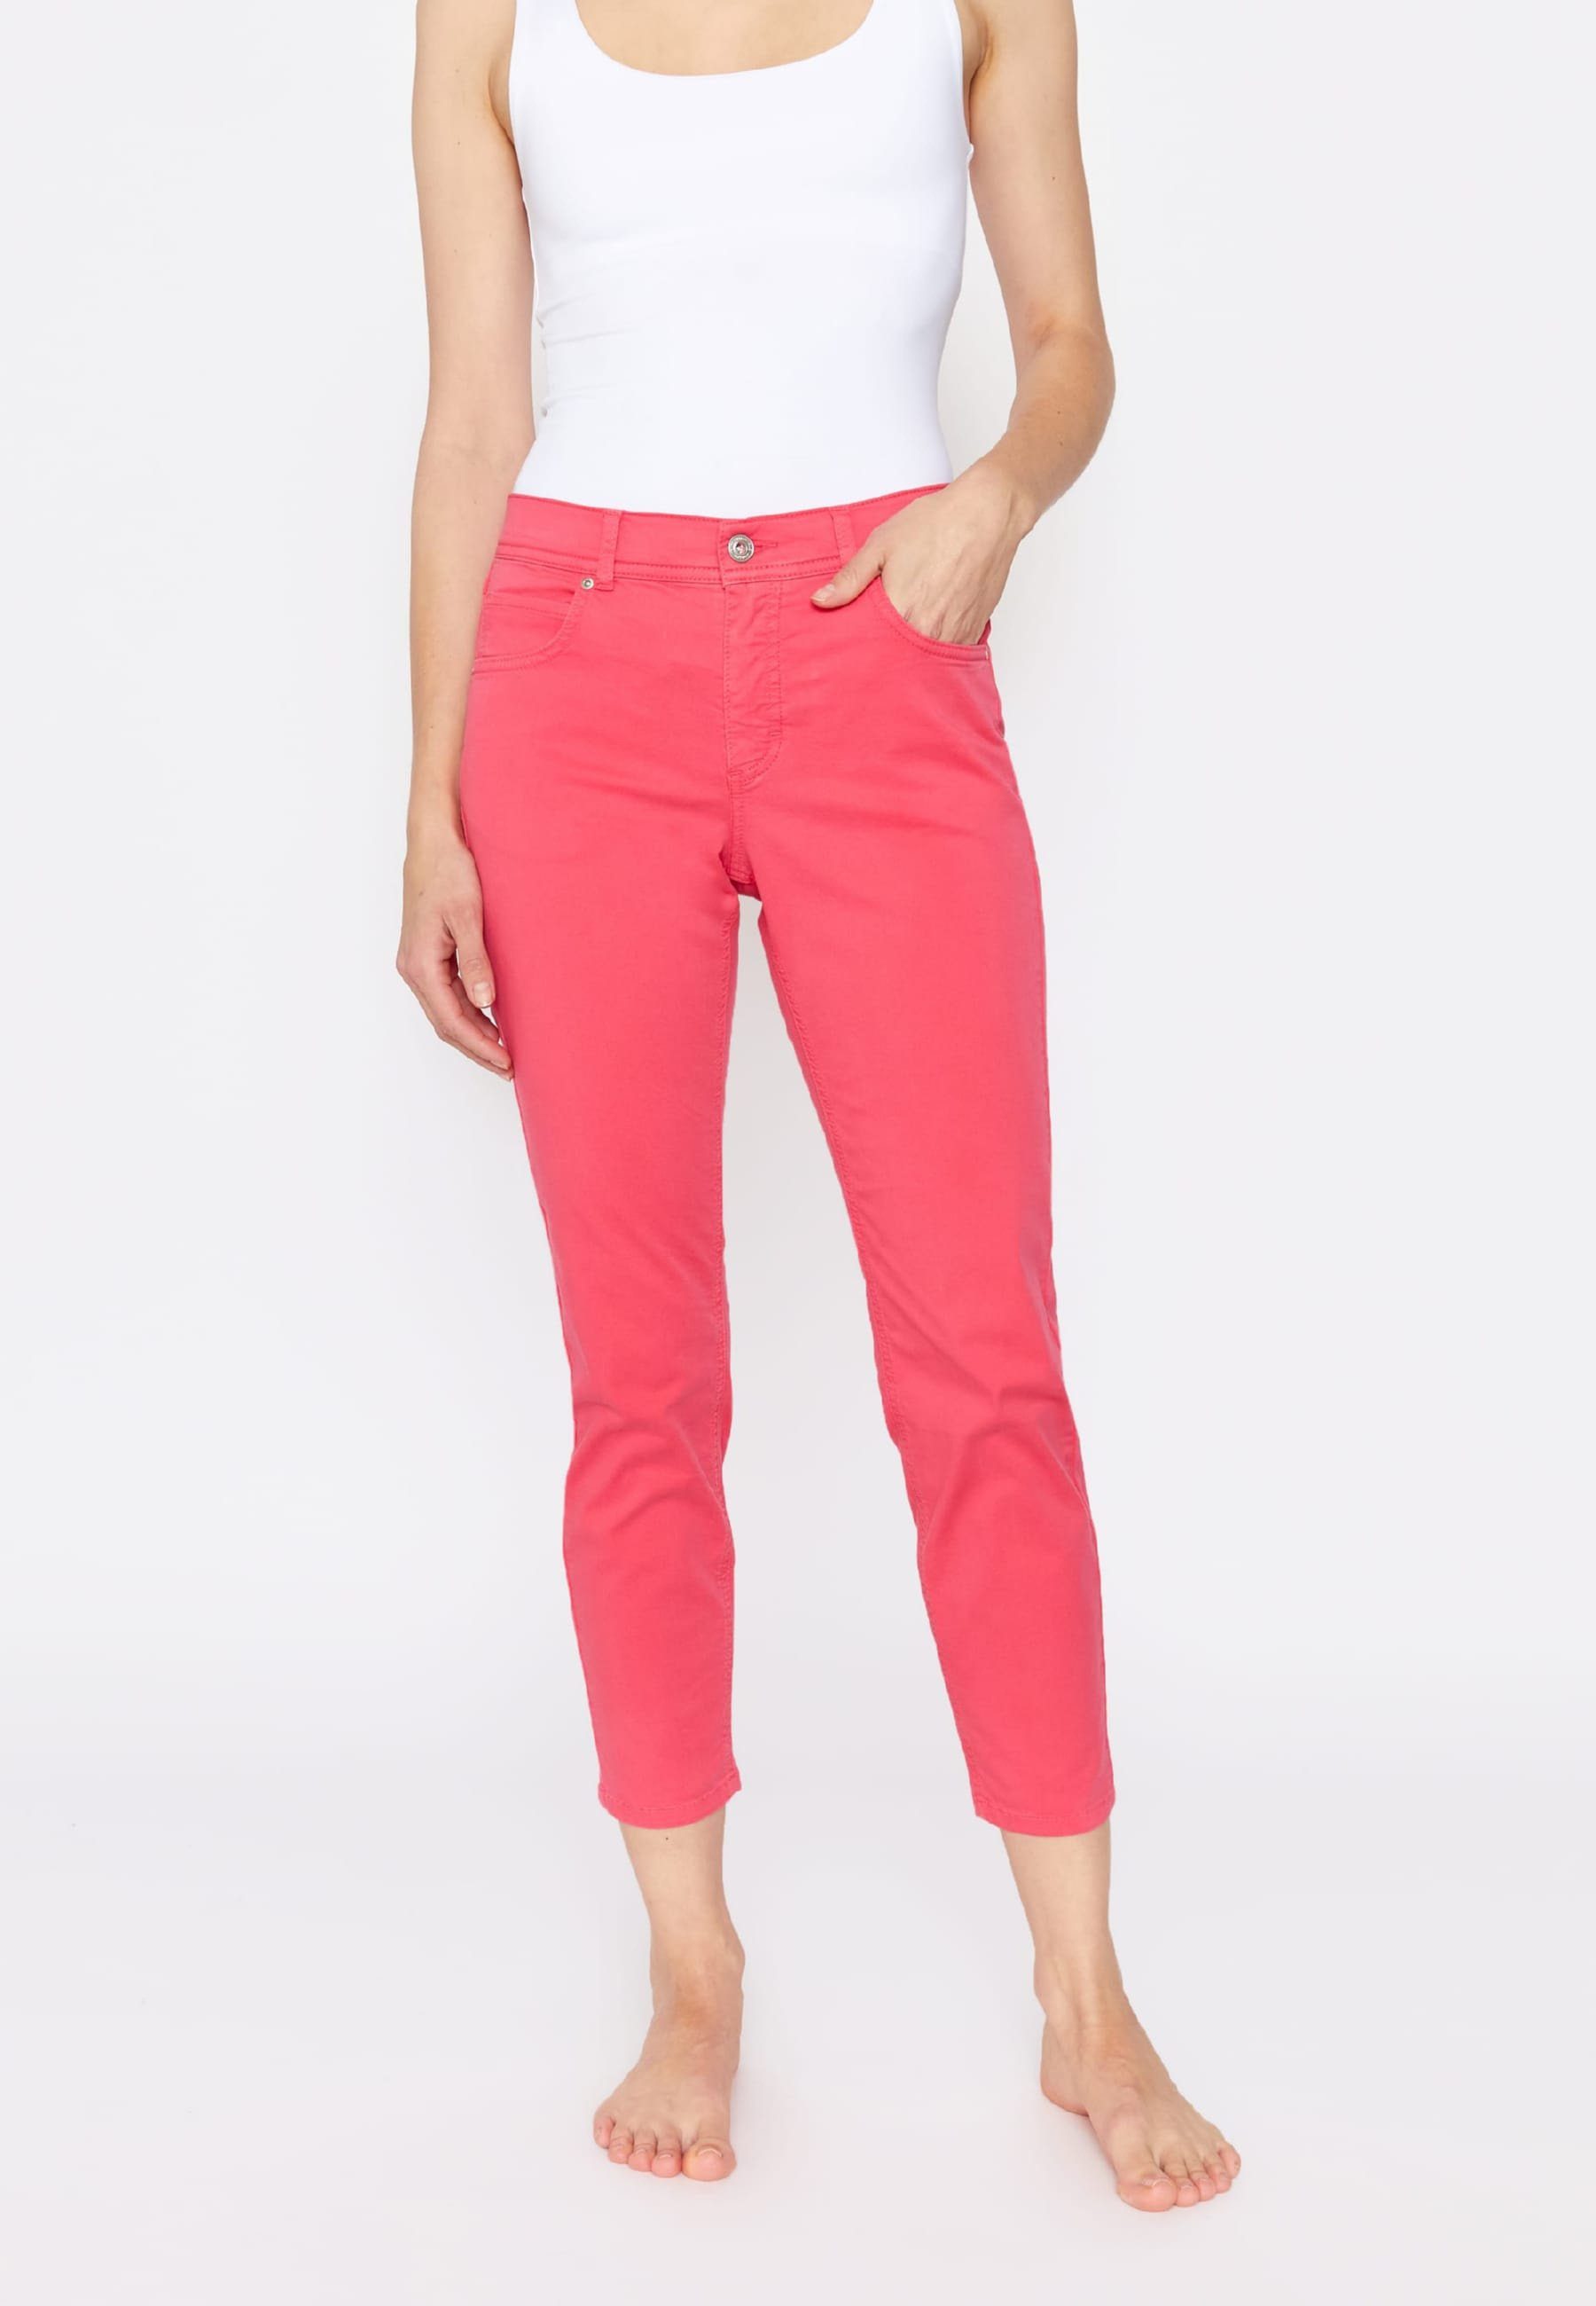 ANGELS 7/8-Jeans Coloured Jeans Ornella pink mit Label-Applikationen